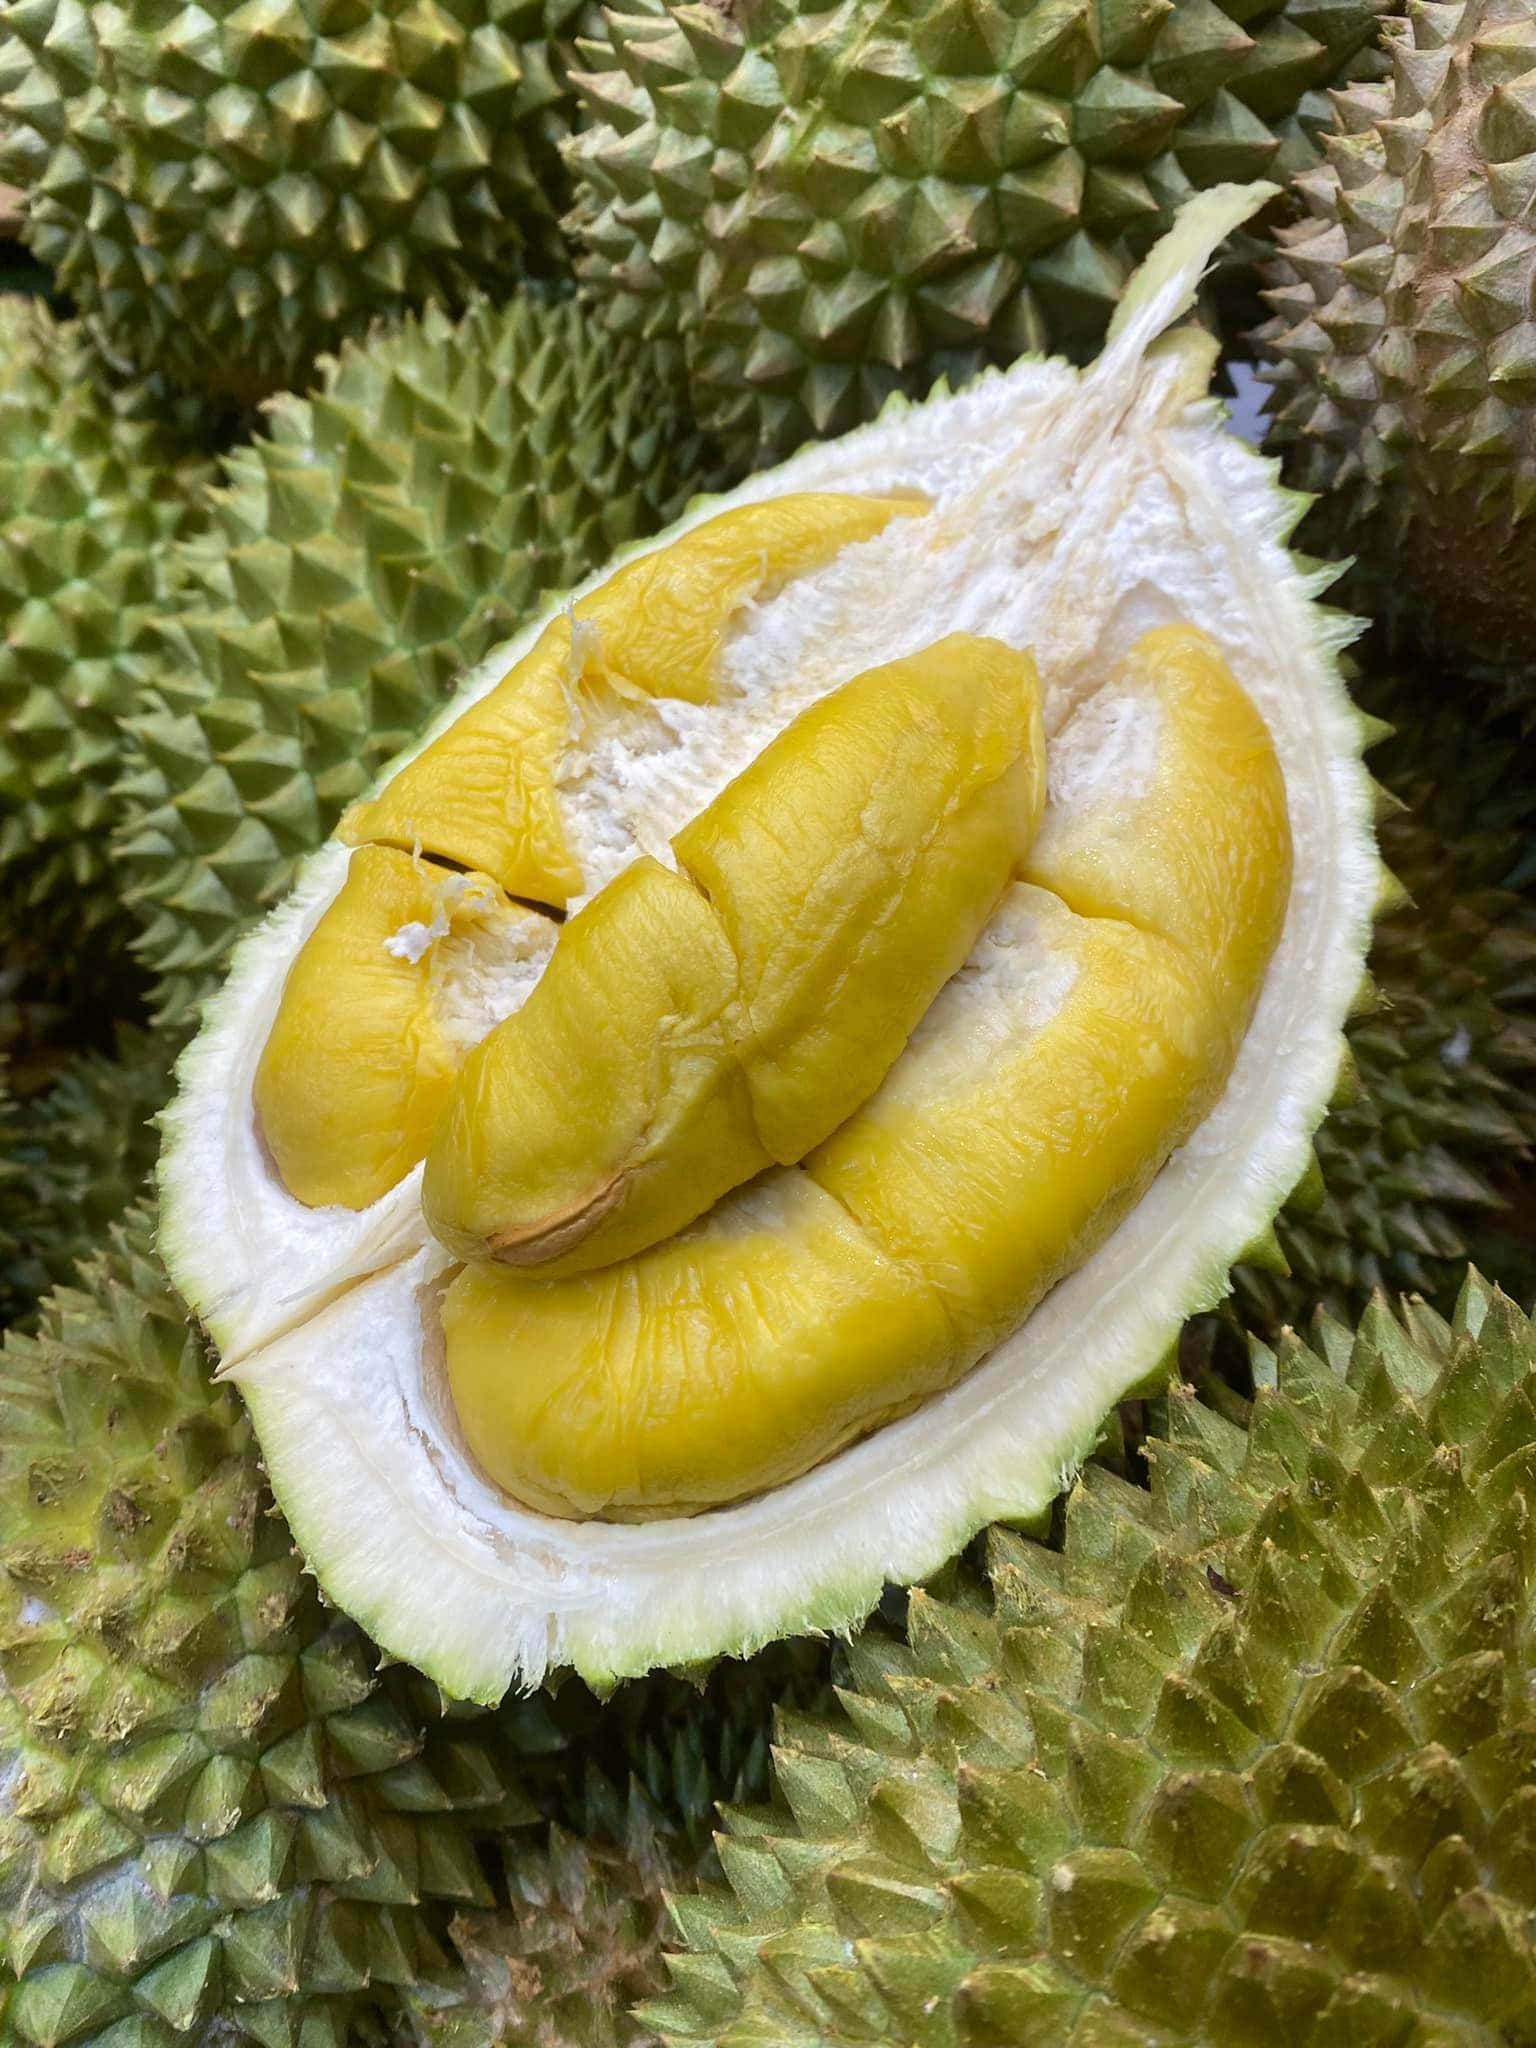 durians